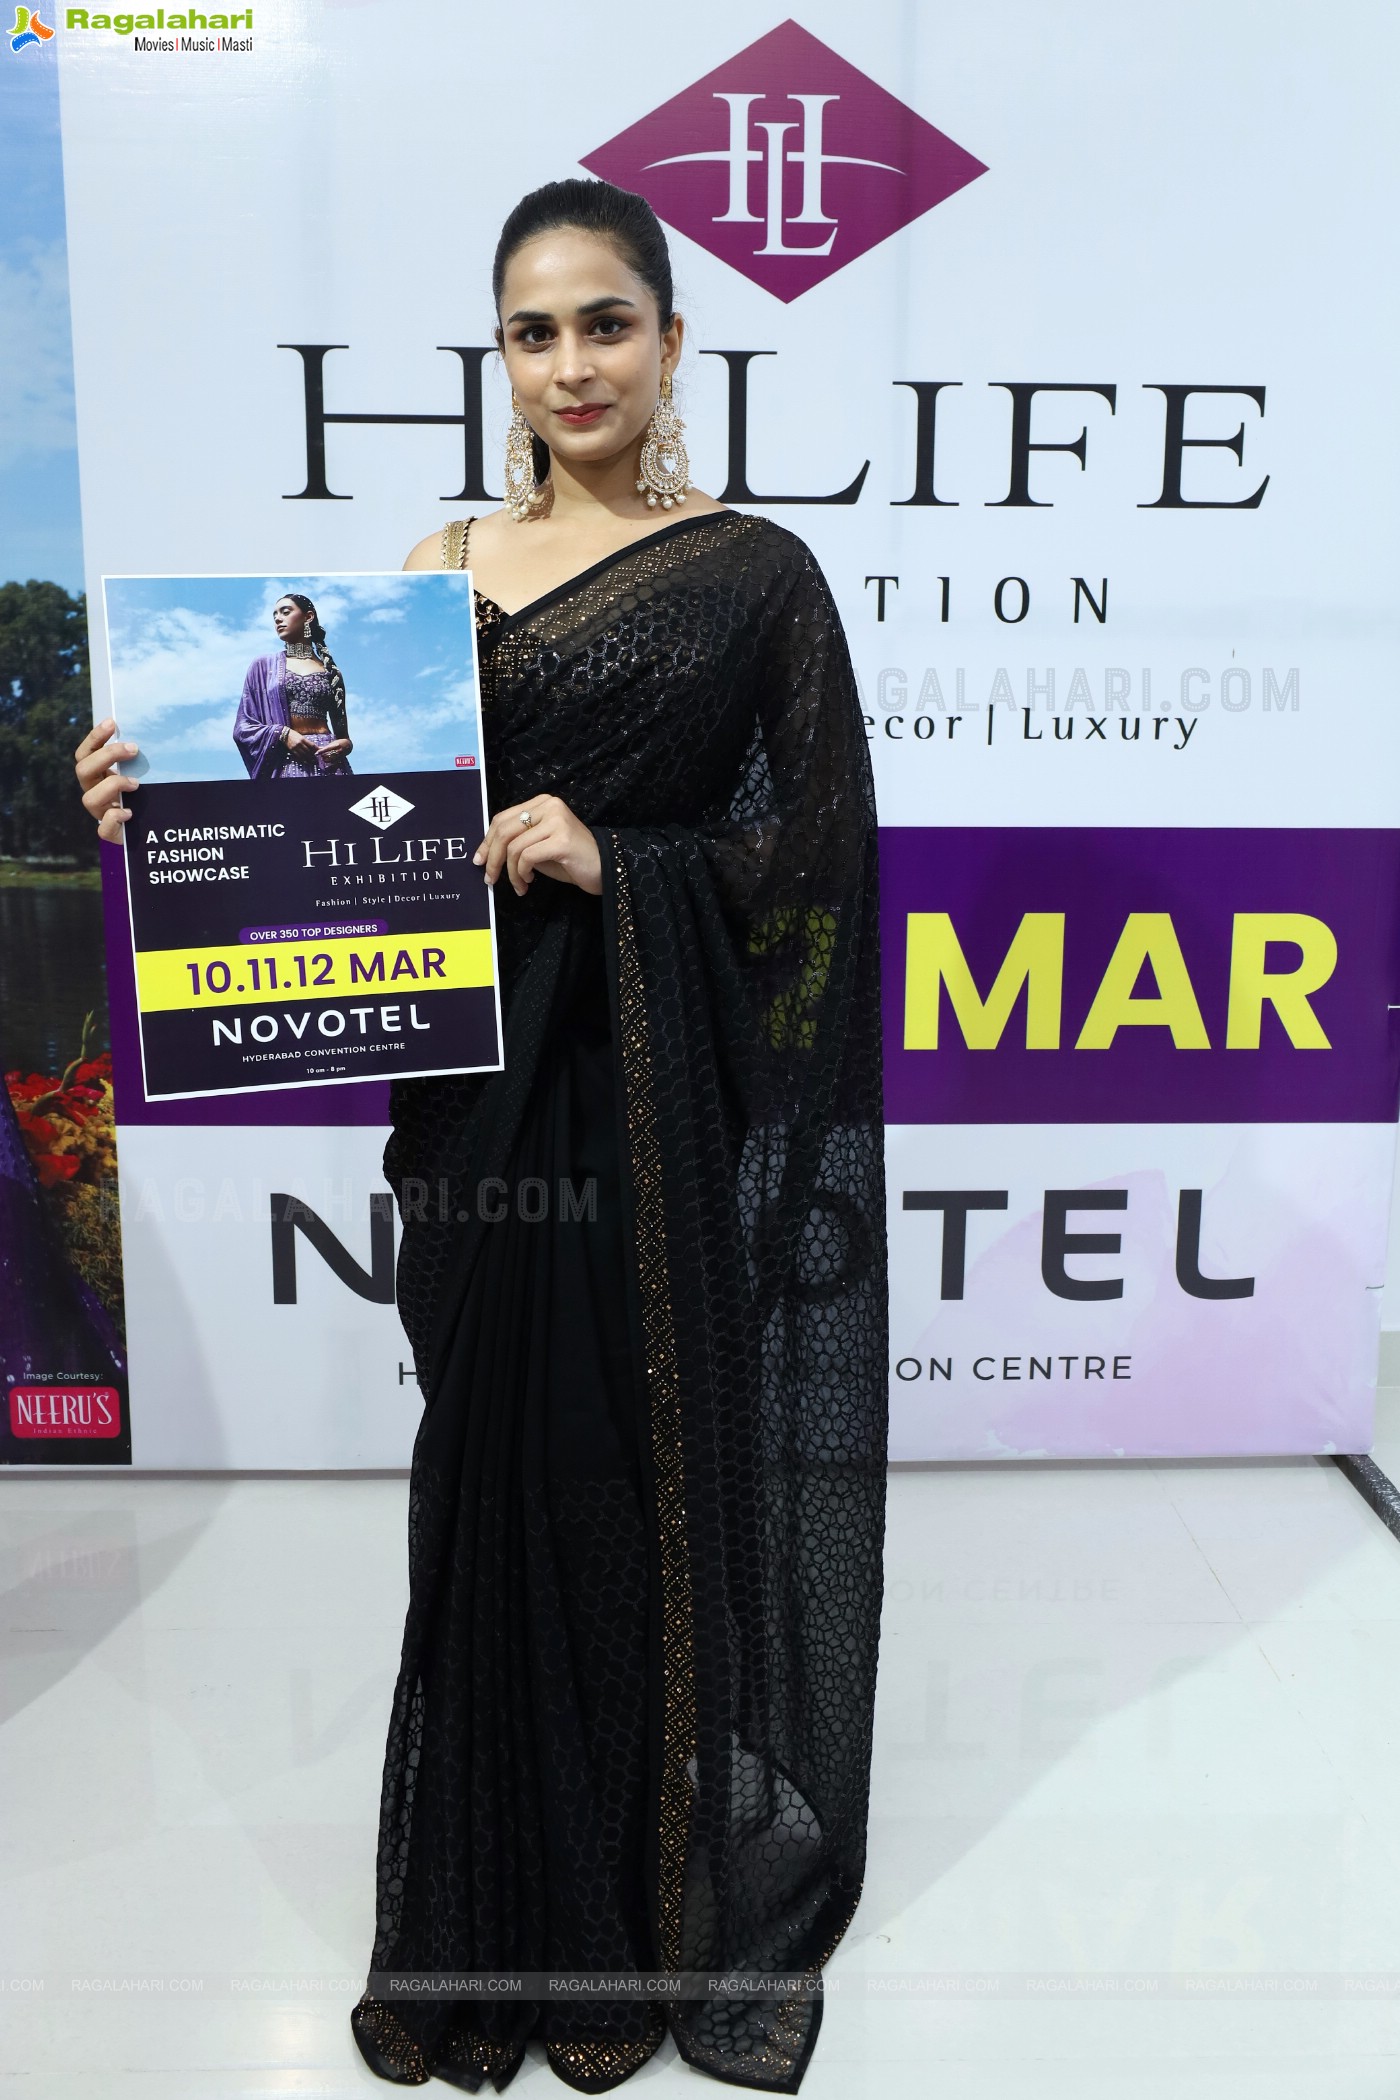 Hi Life Exhibition March 2023 Grand Fashion Showcase, Hyderabad